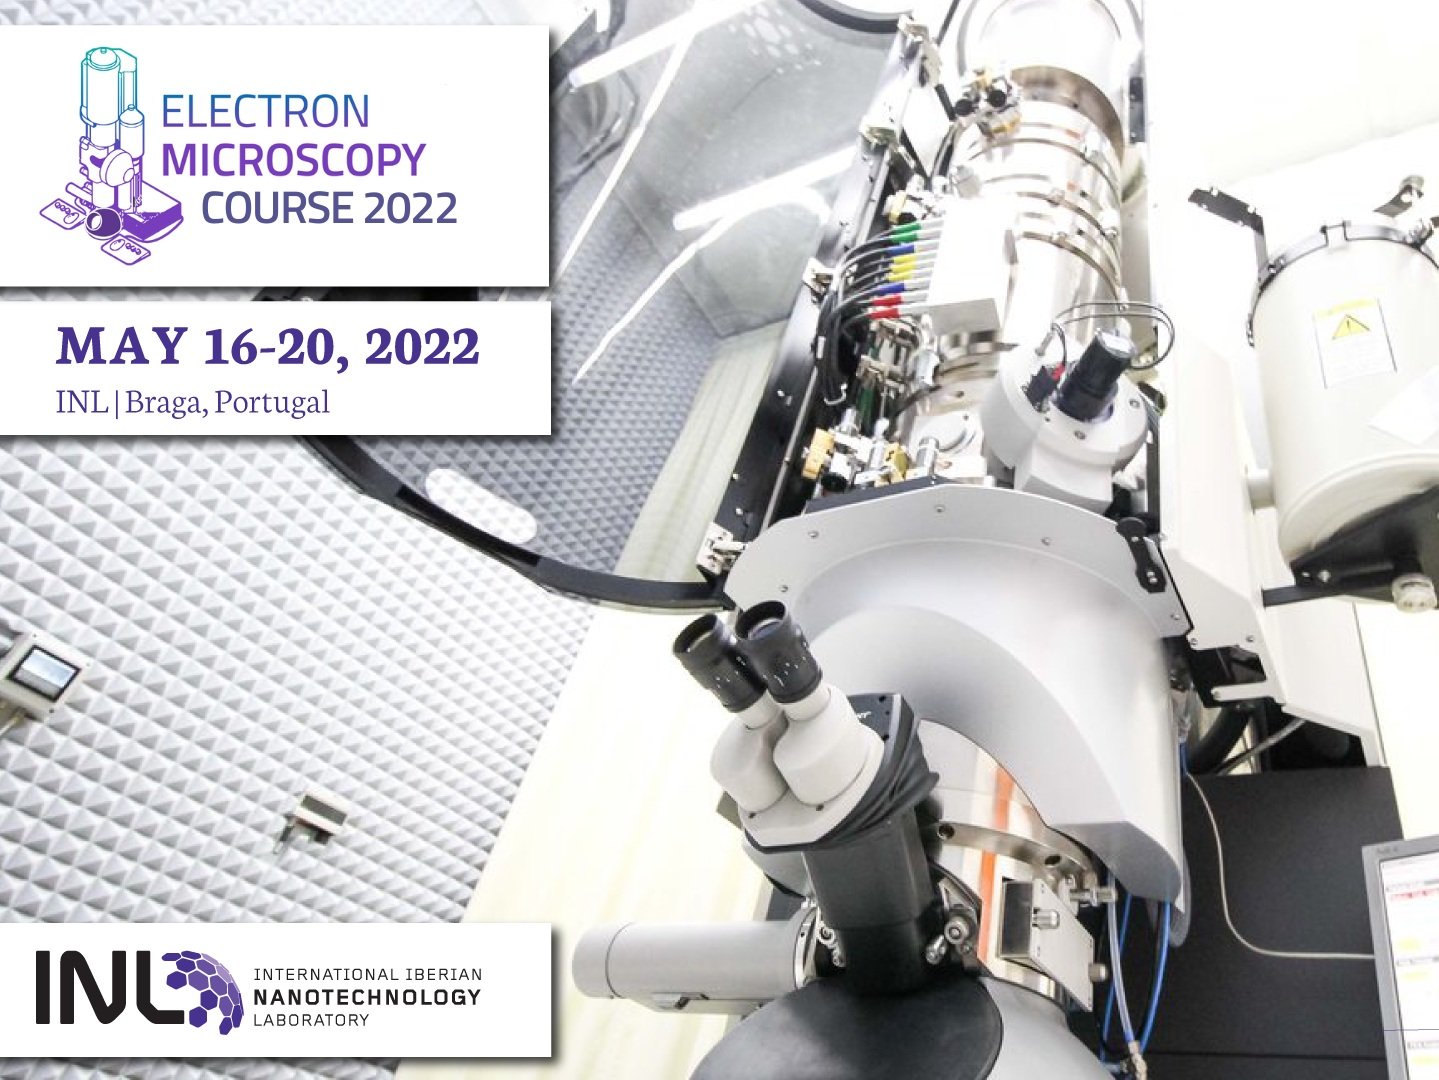 Electron Microscopy Course 2022 coming your way!